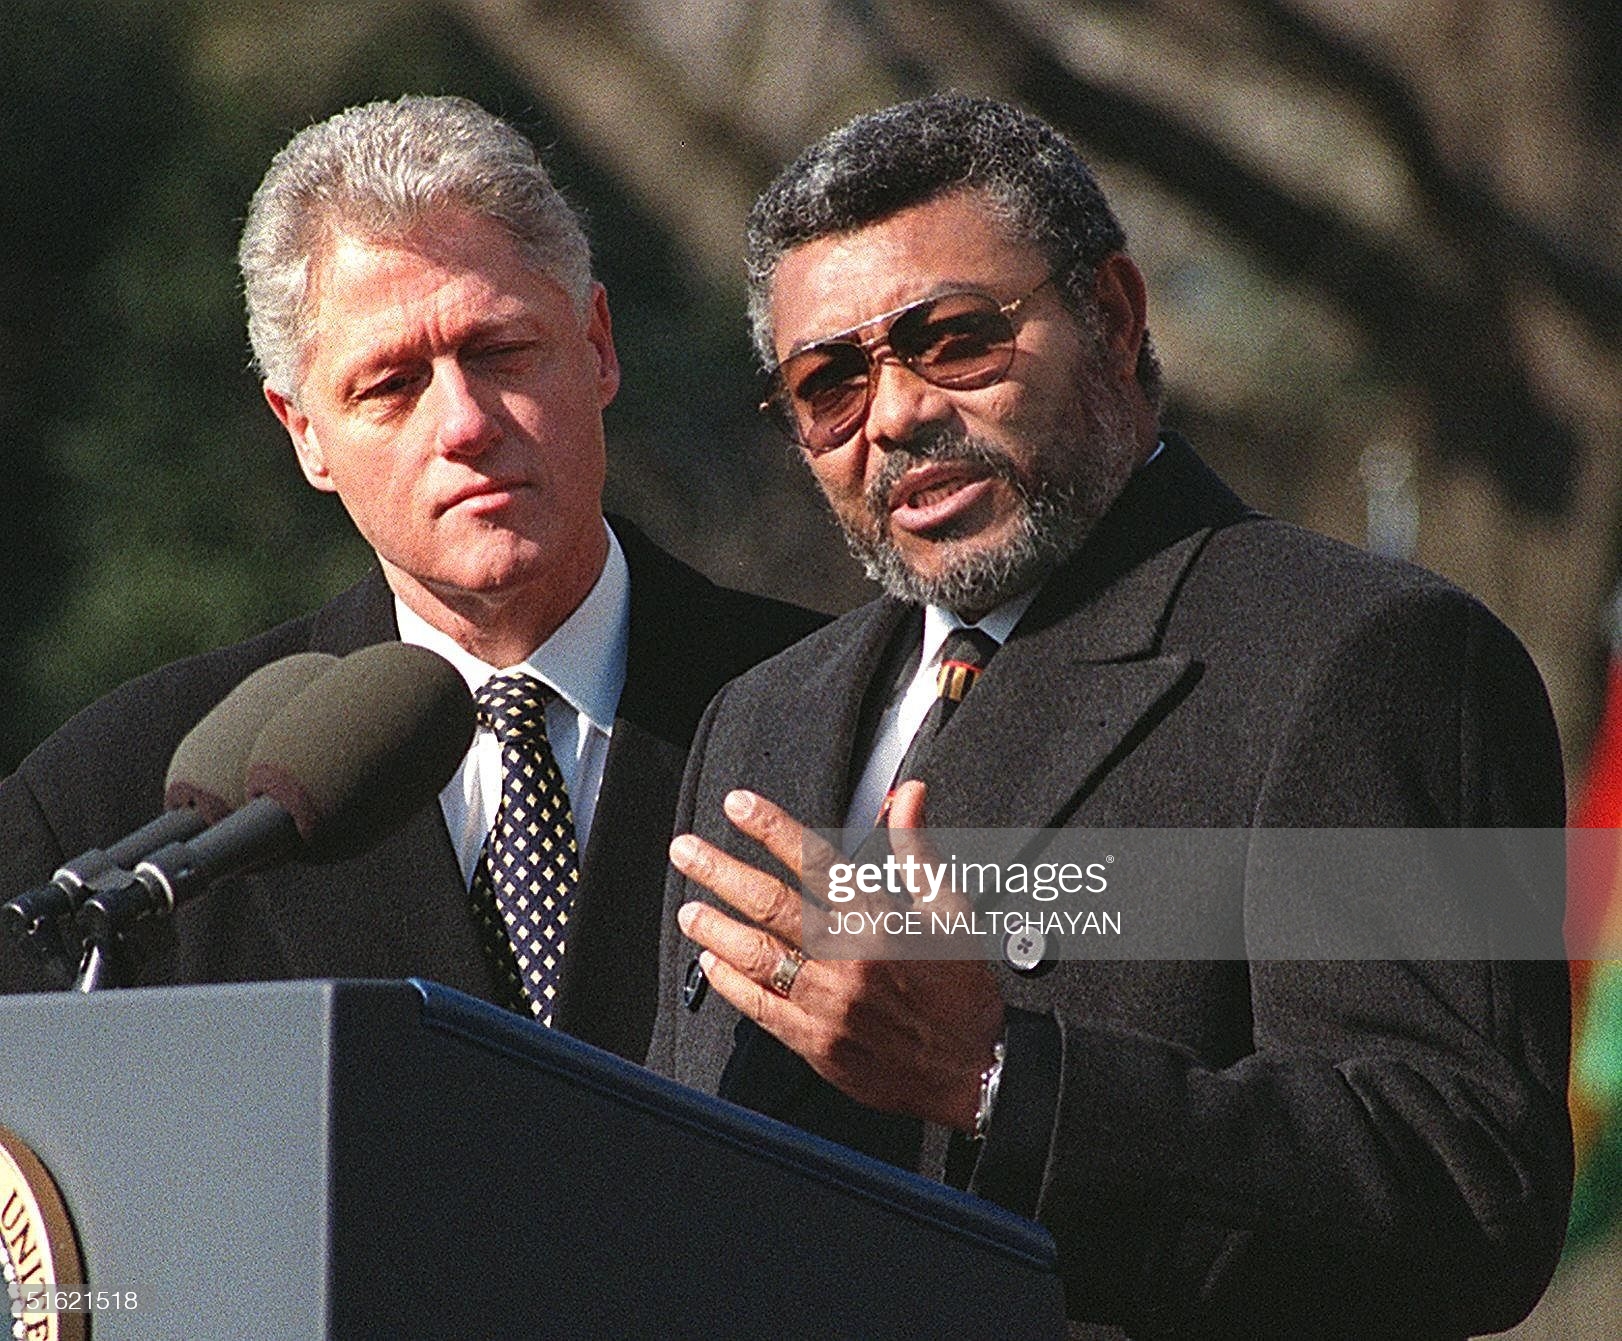 JJ Rawlings and Bill Clinton